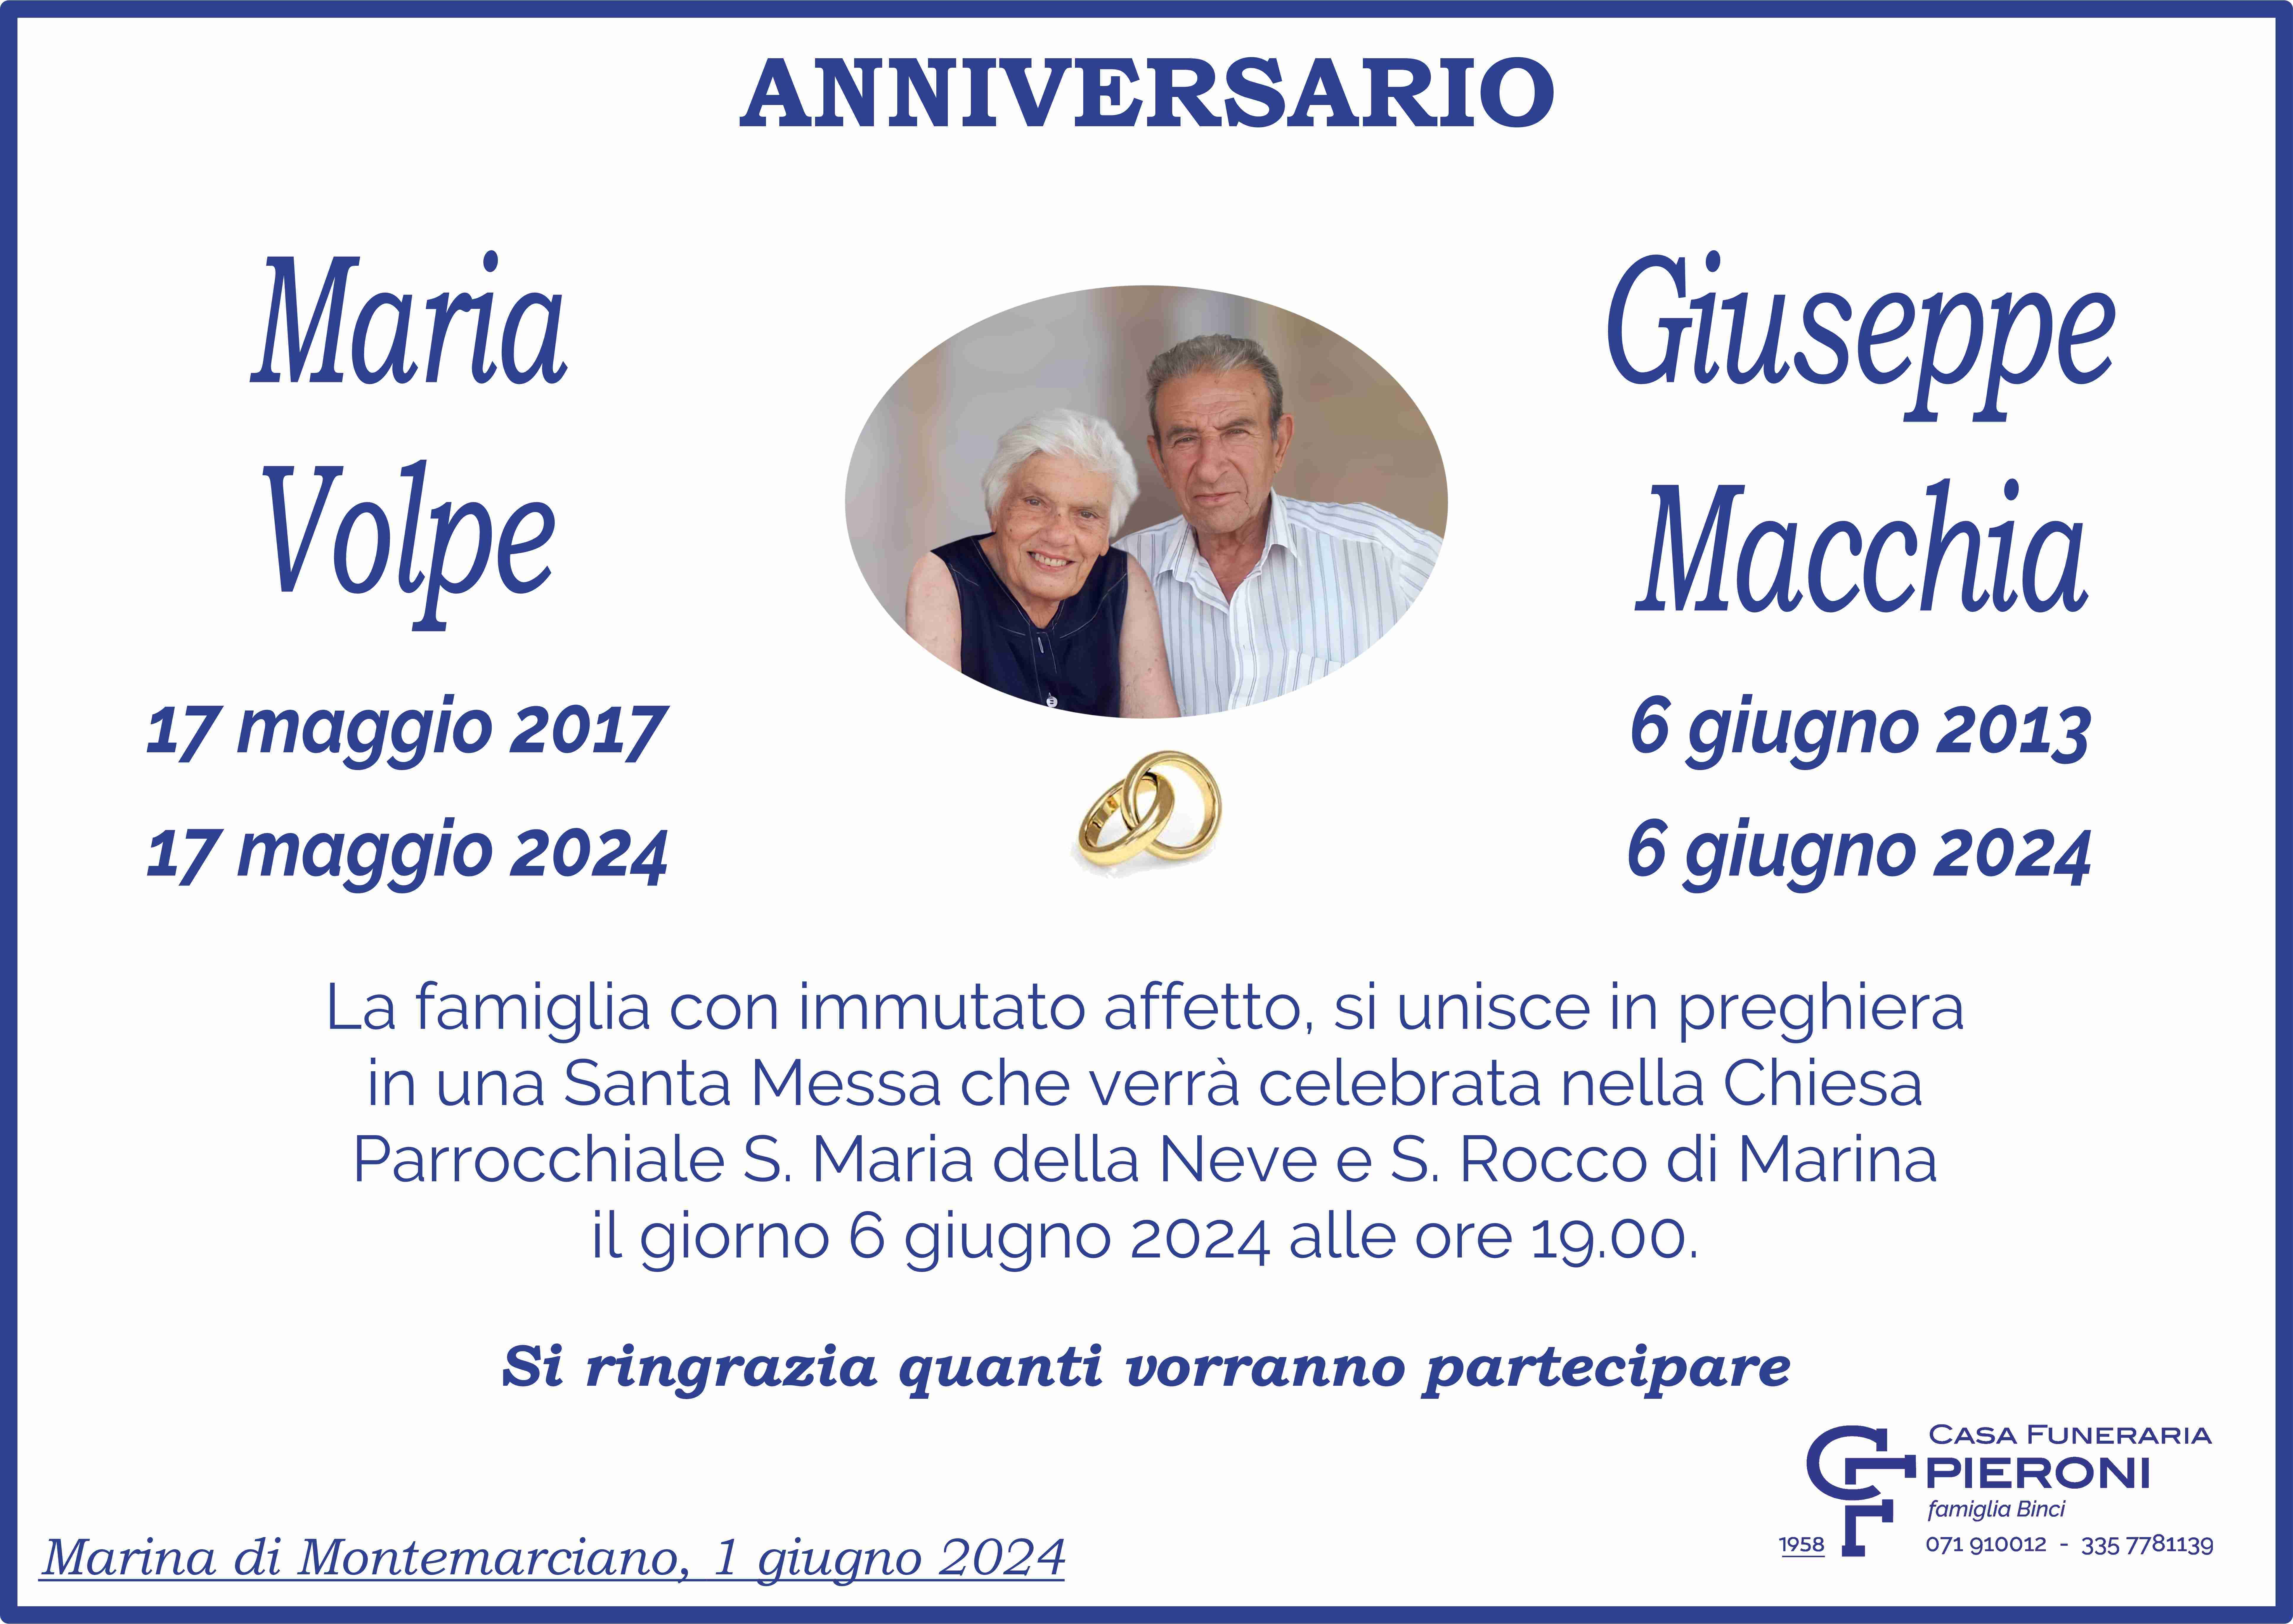 Giuseppe Macchia - Maria Volpe